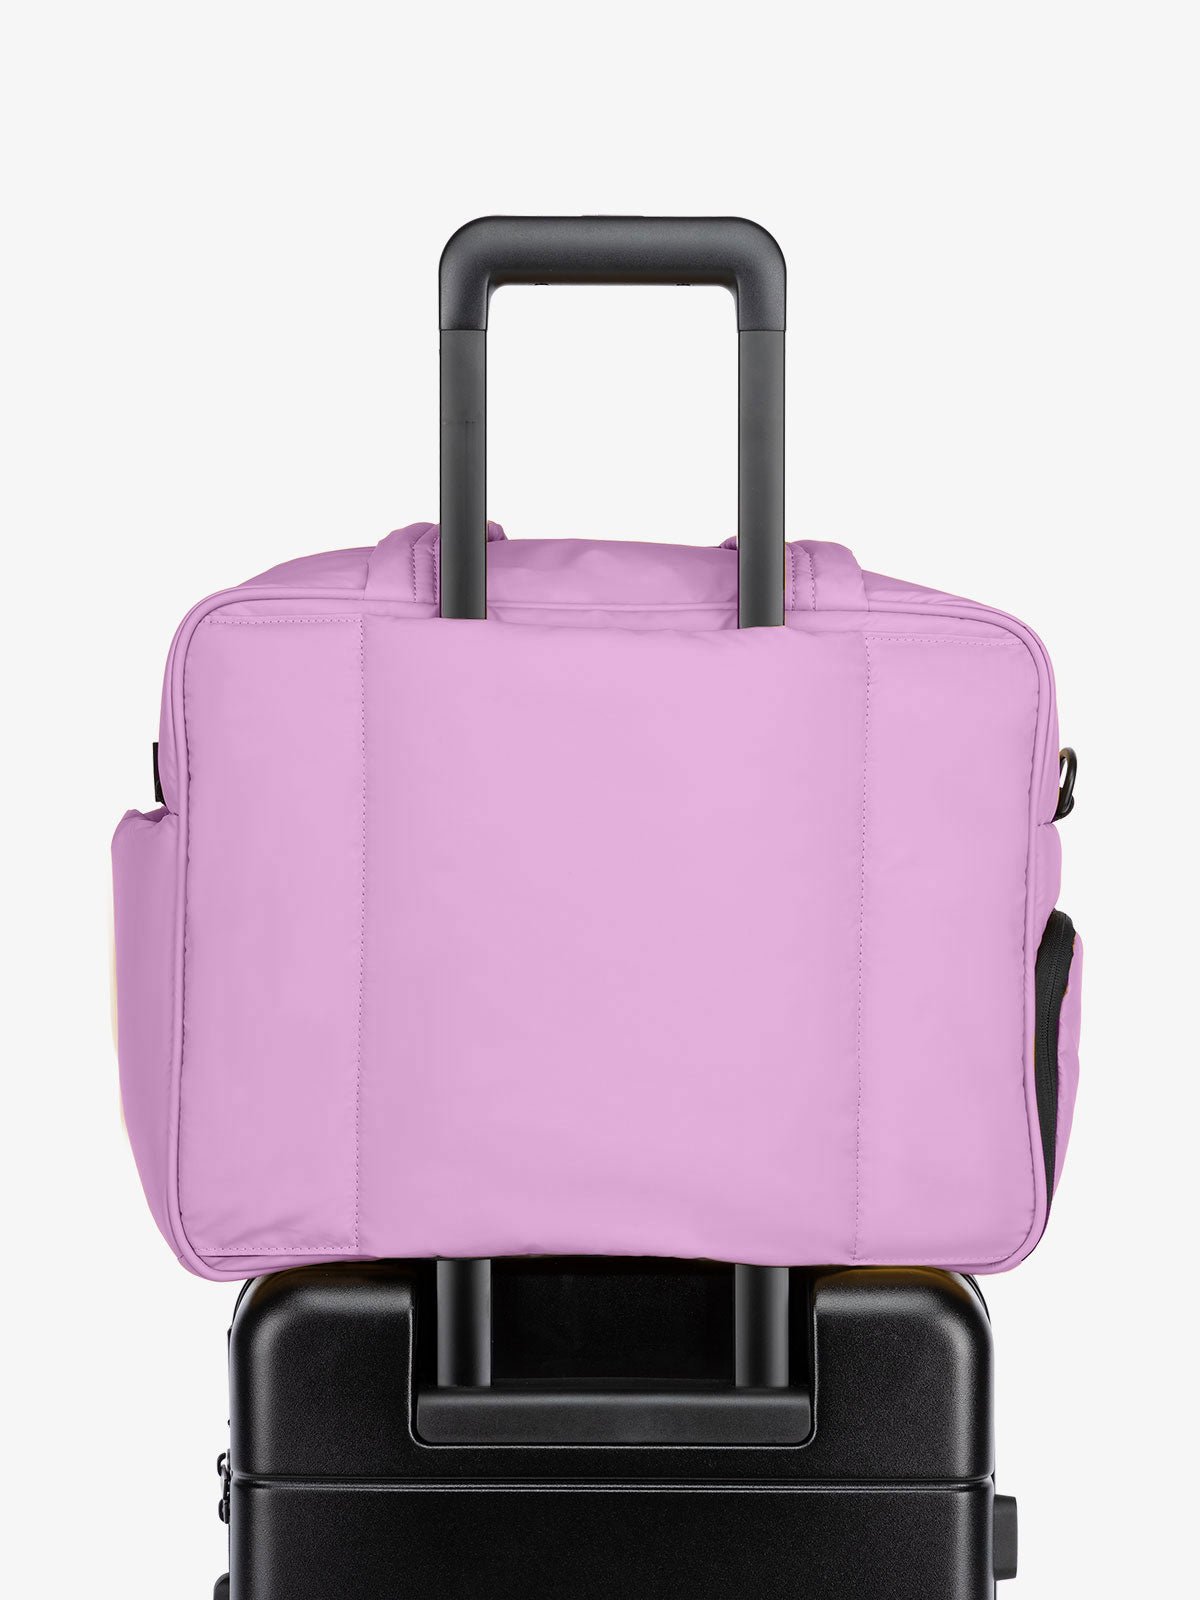 CALPAK Luka Duffel bag with luggage trolley sleeve in light purple lilac